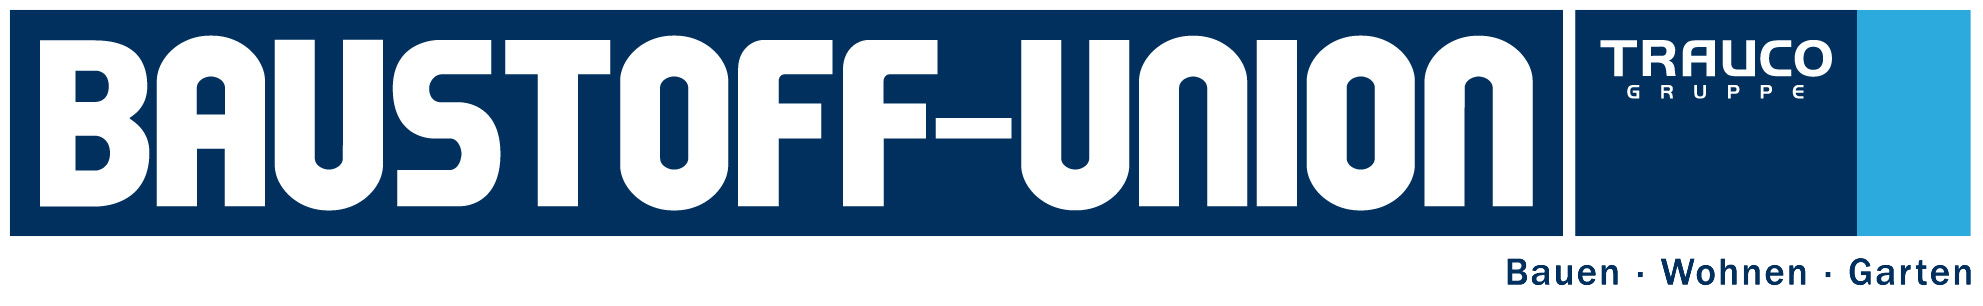 Baustoffunion GmbH logo